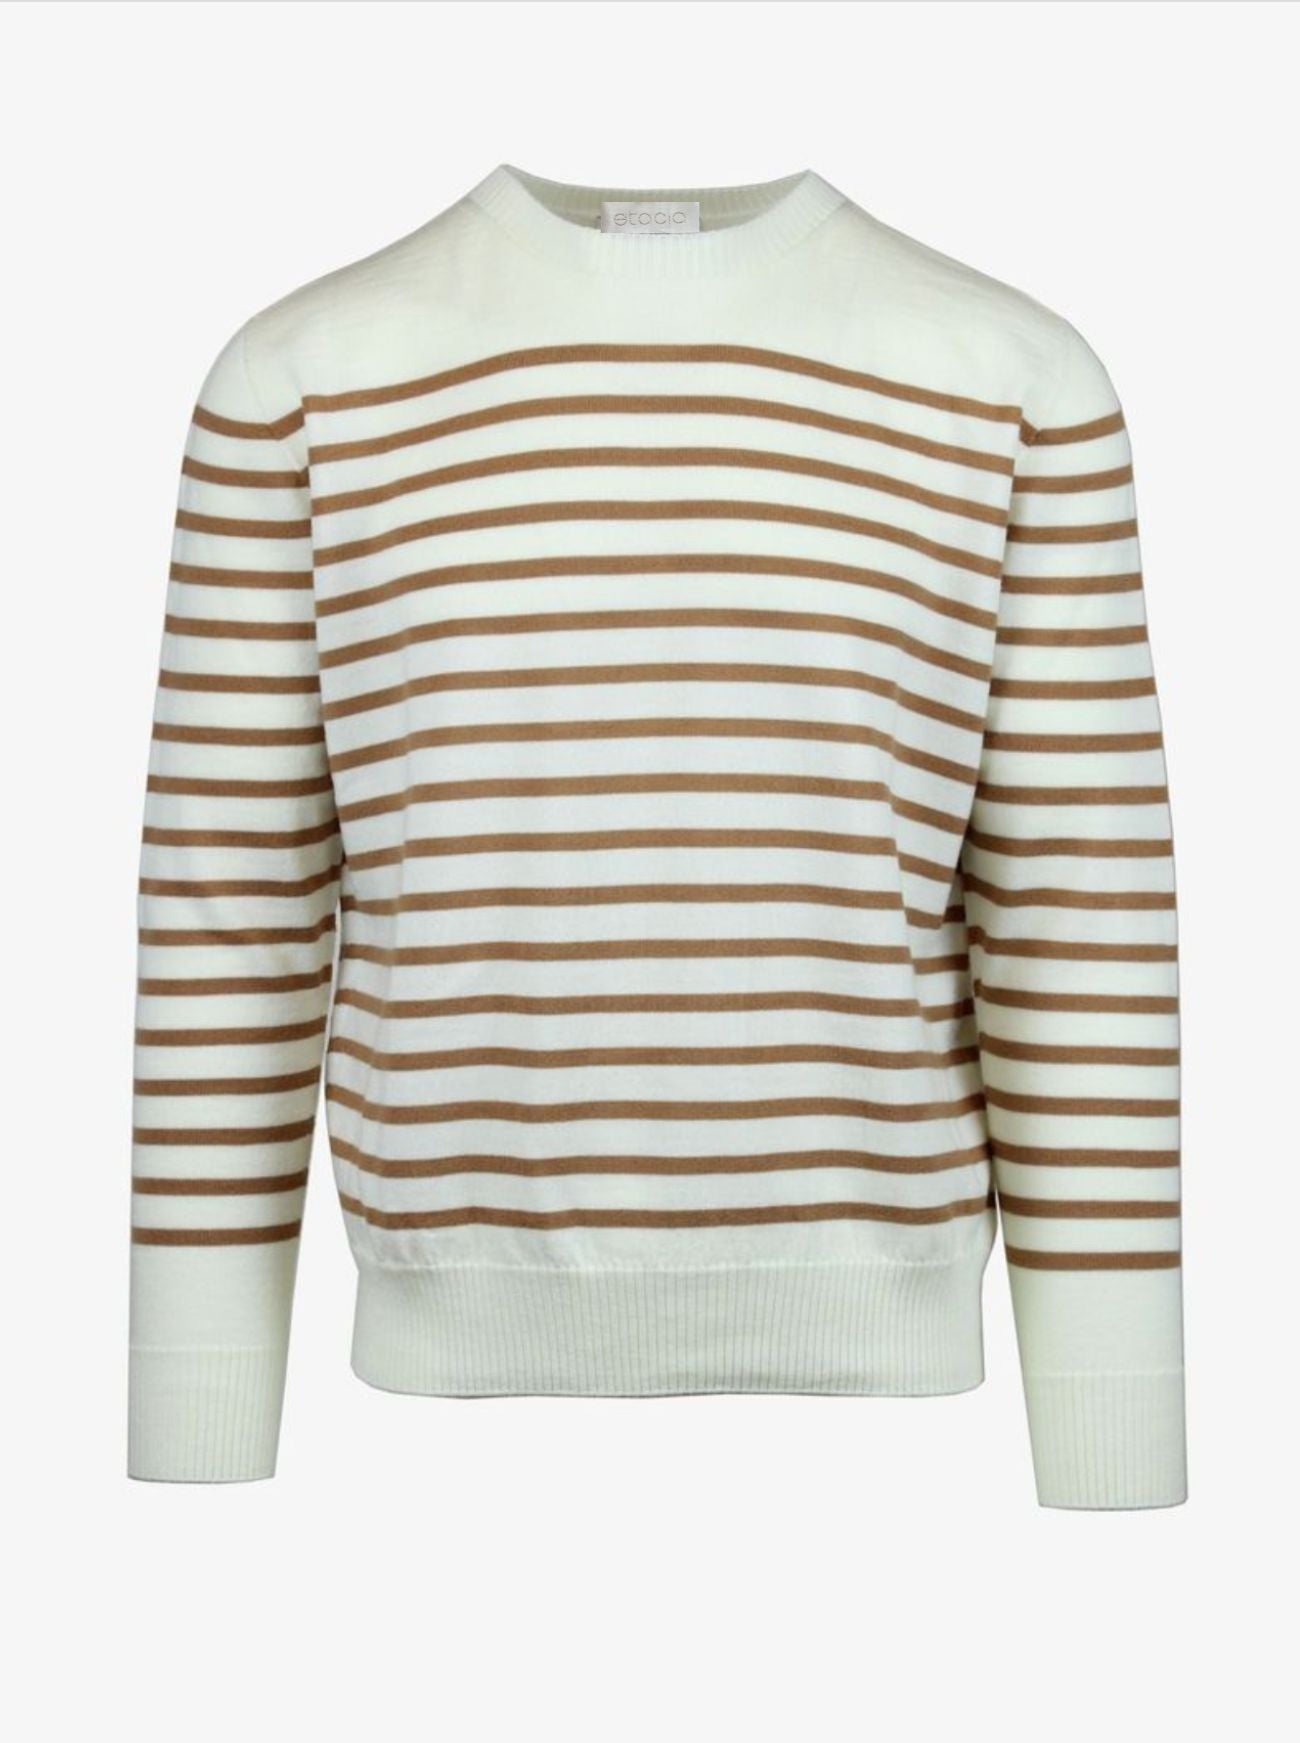 montauk ivory/camel stripe mens merino wool sweater